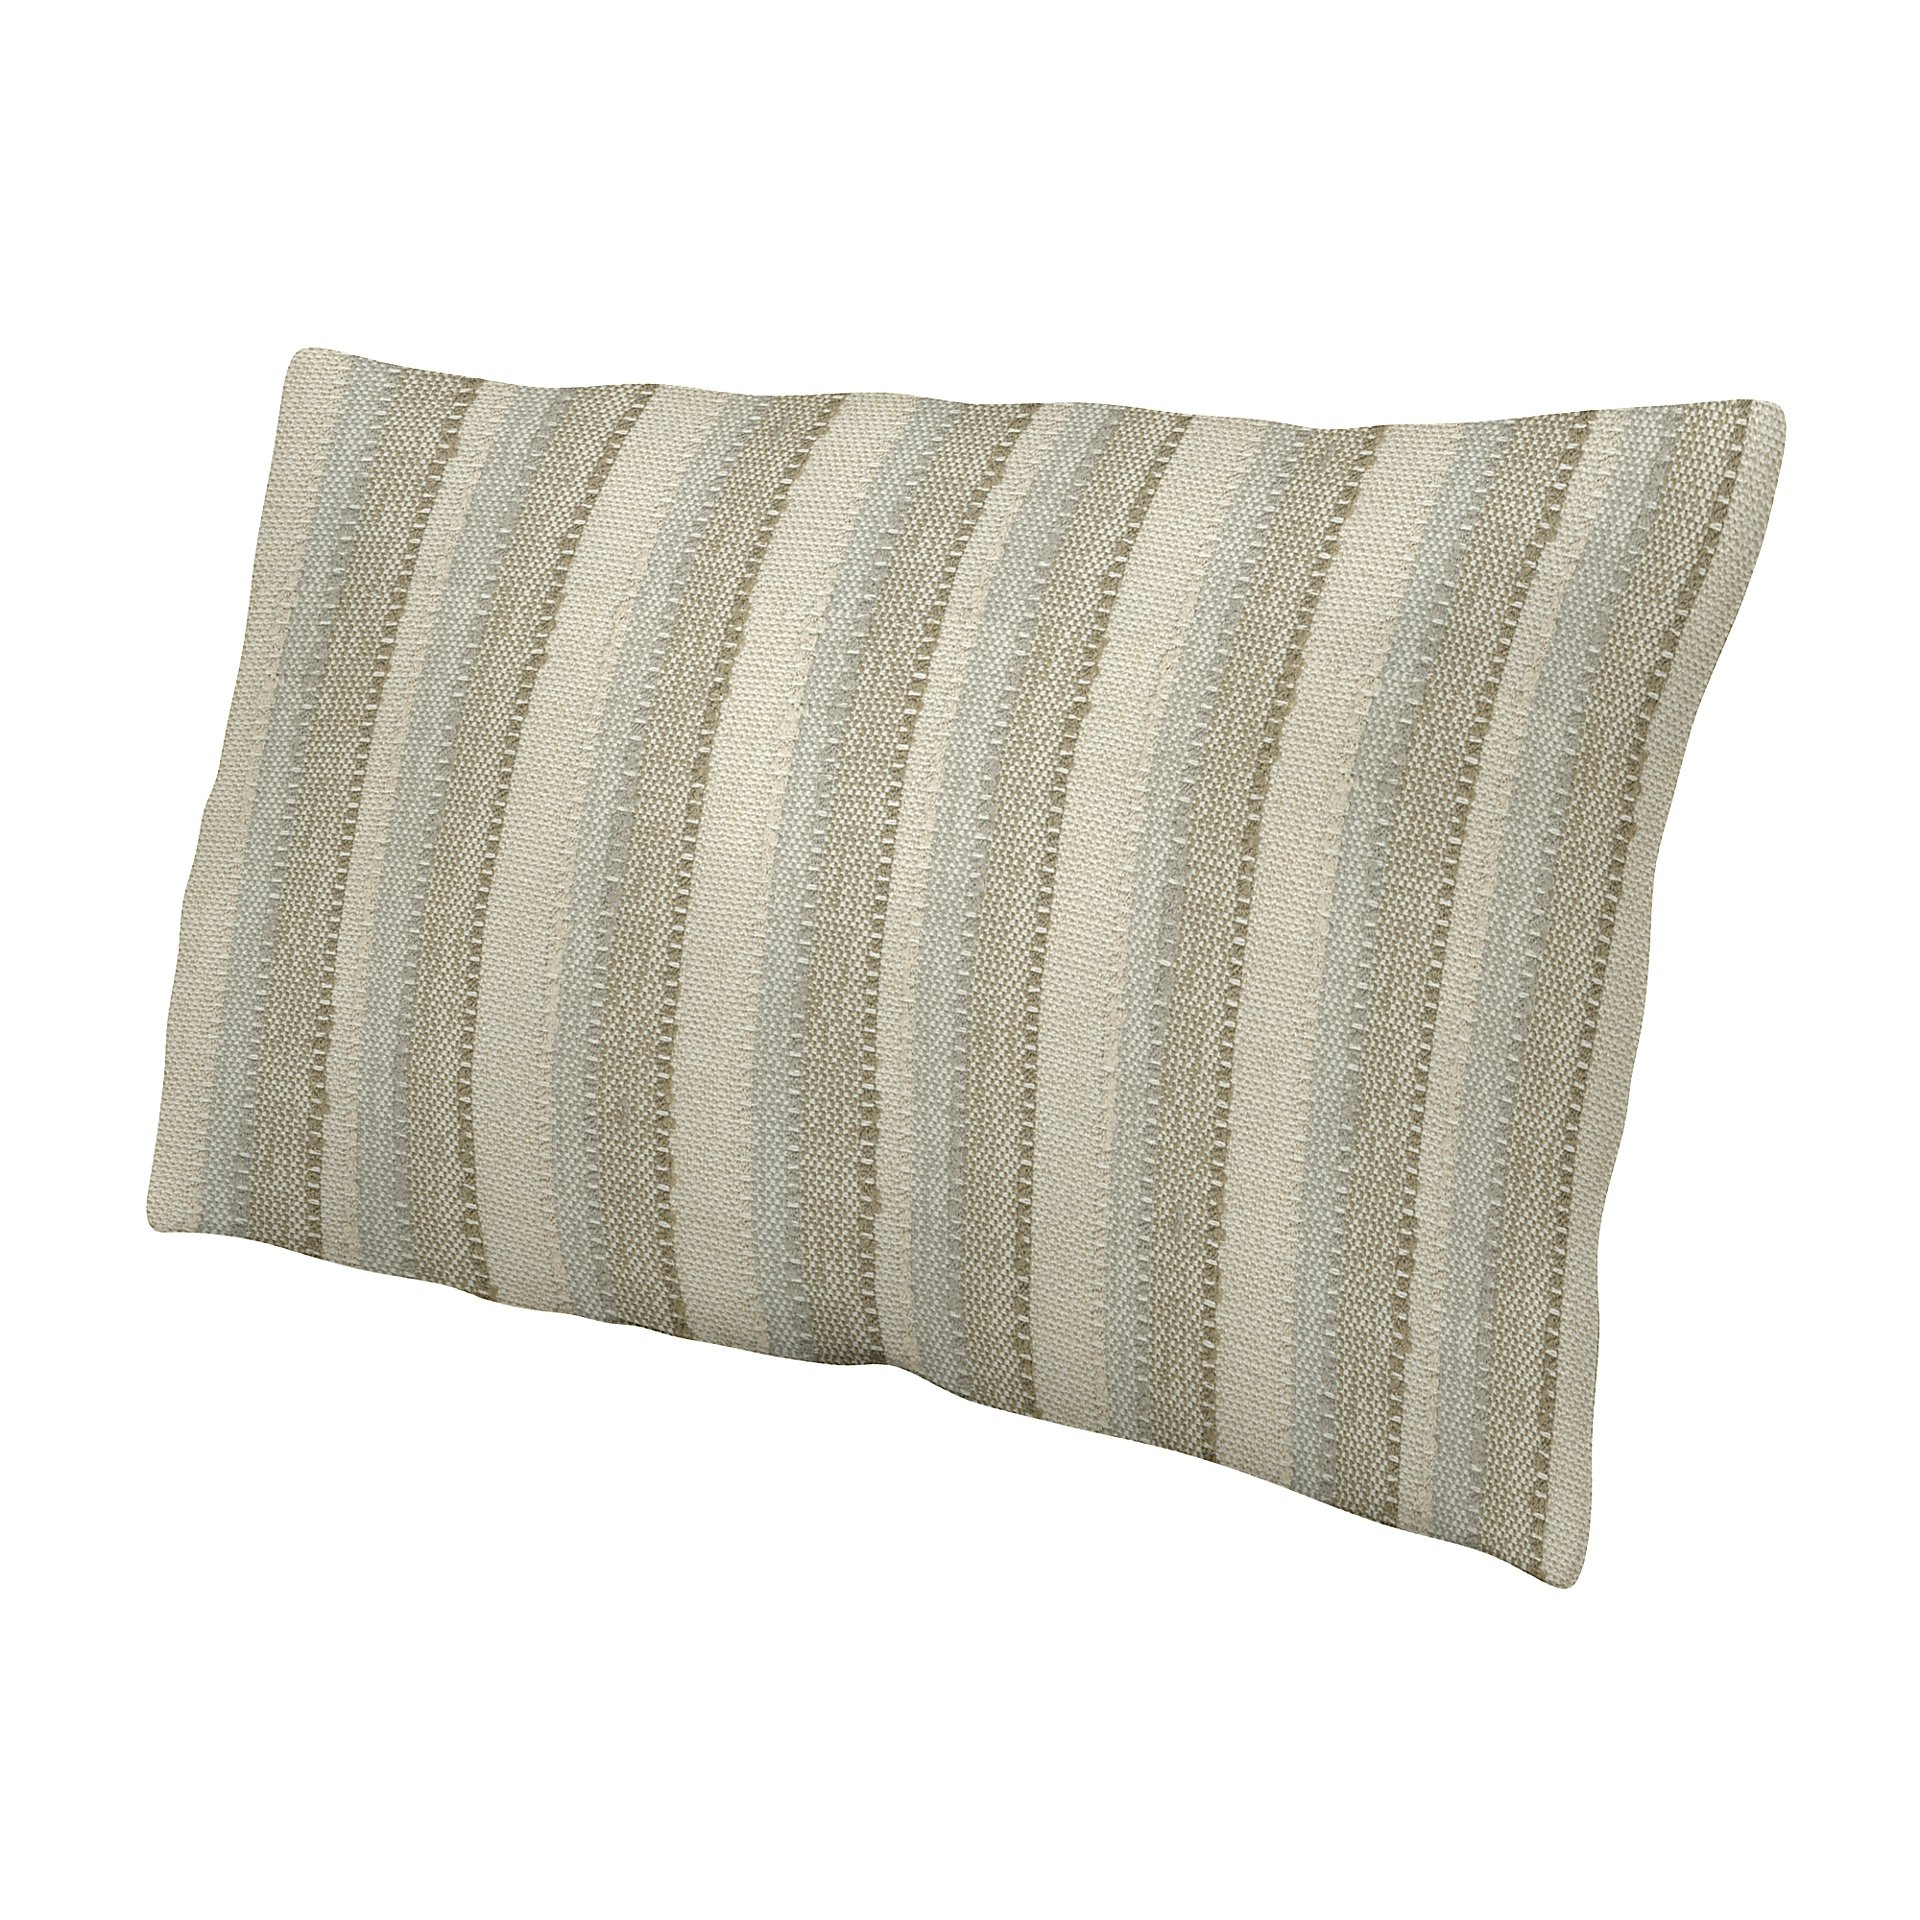 IKEA - Cushion Cover Ektorp 40x70 cm, Beach Beige, Outdoor - Bemz